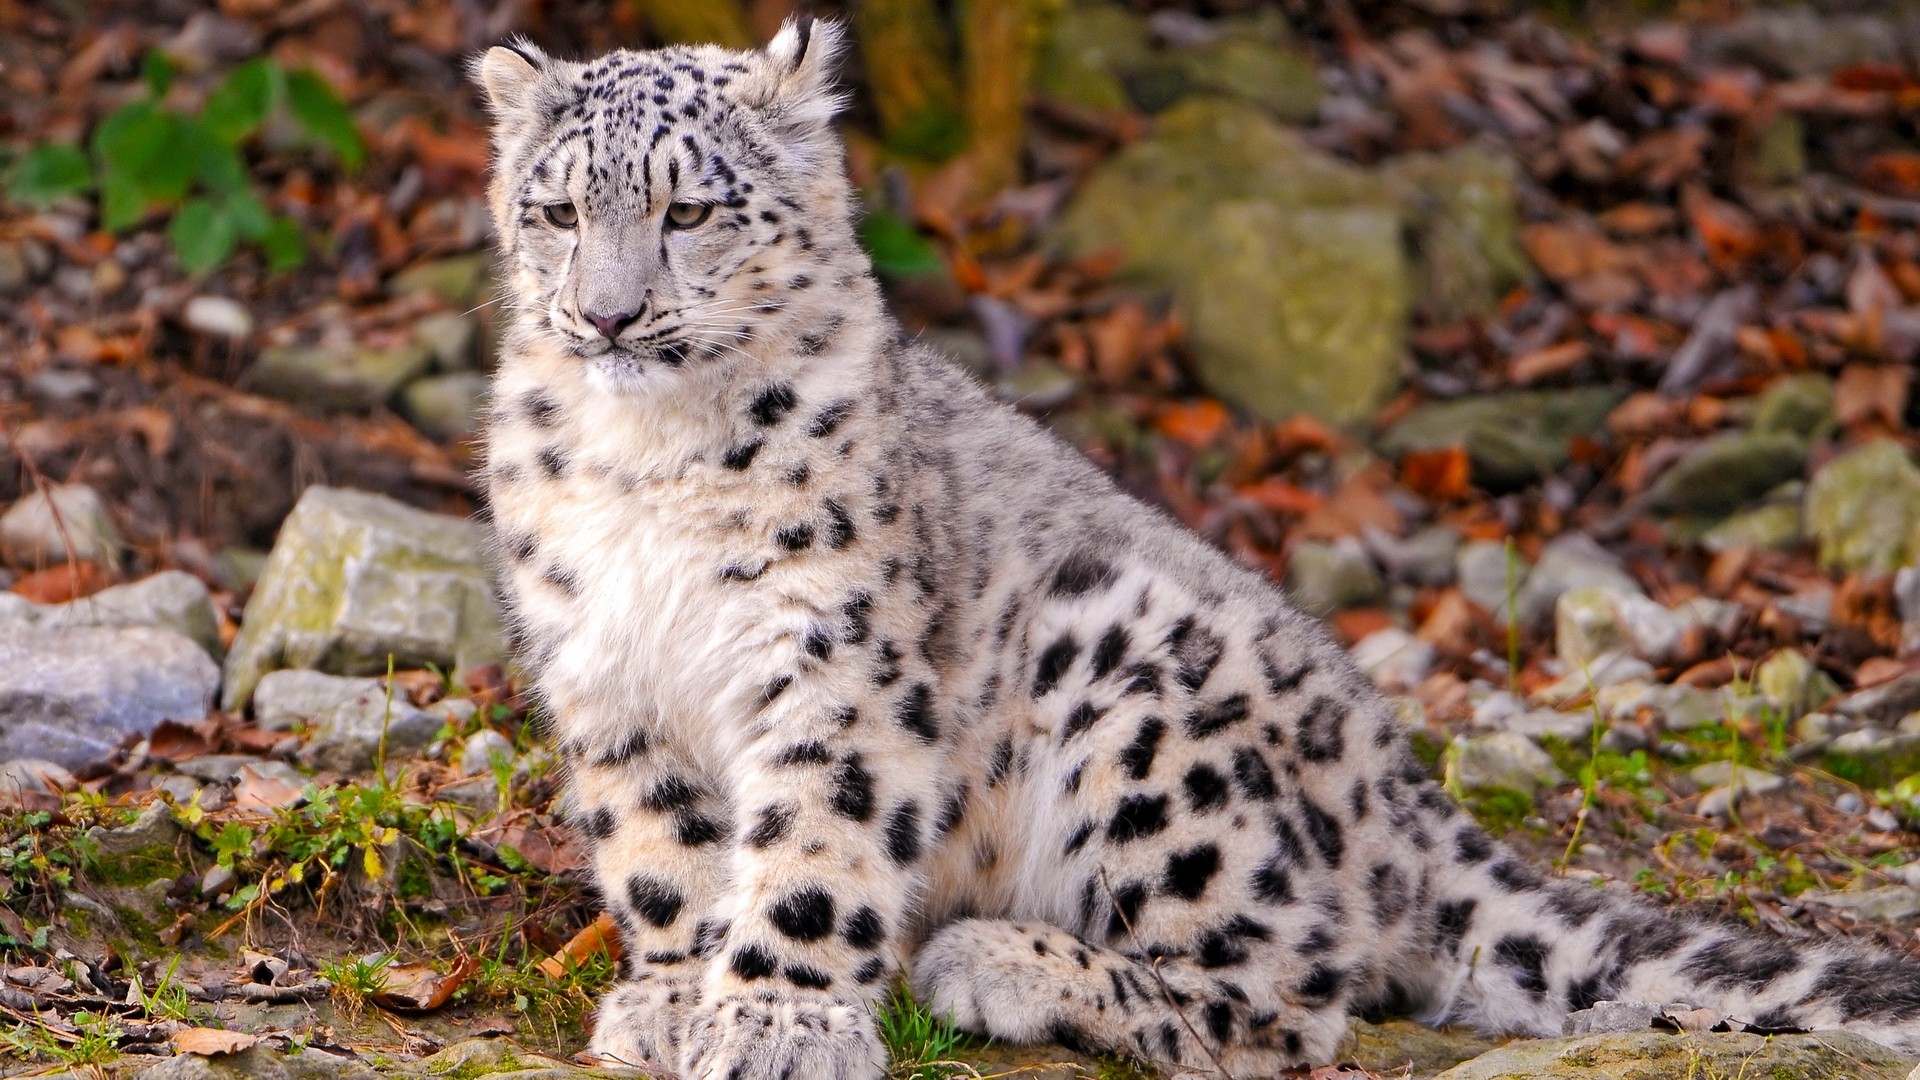 Snow Leopard Desktop Wallpaper